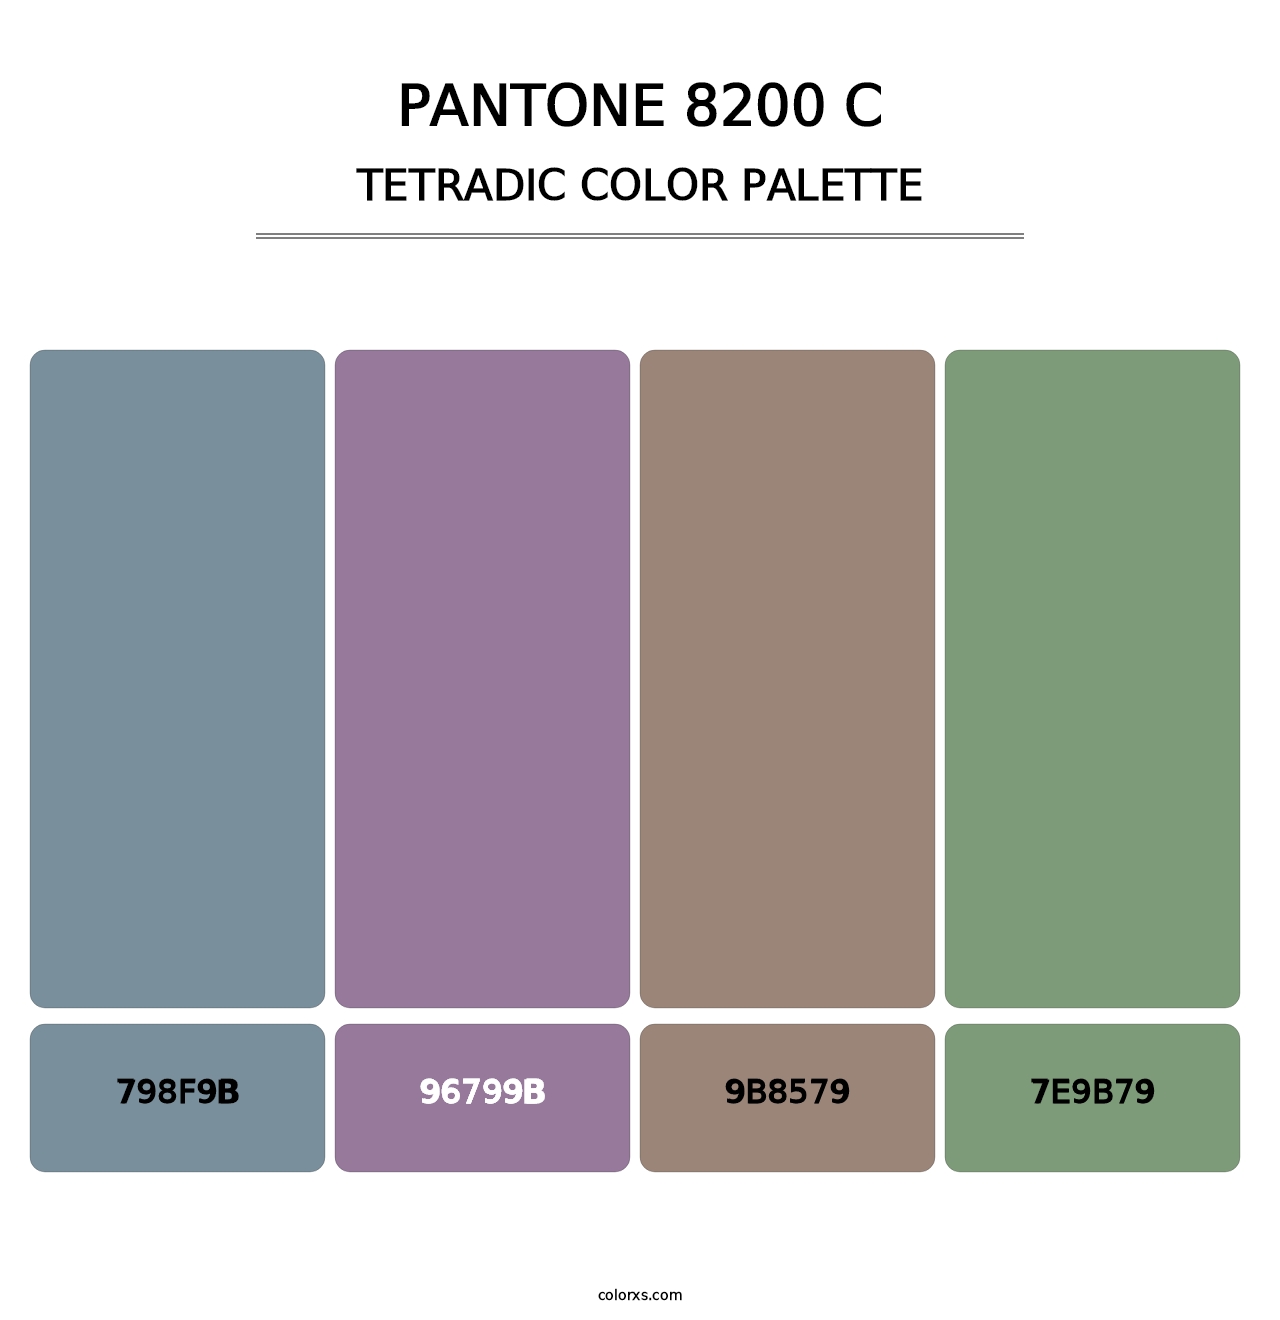 PANTONE 8200 C - Tetradic Color Palette